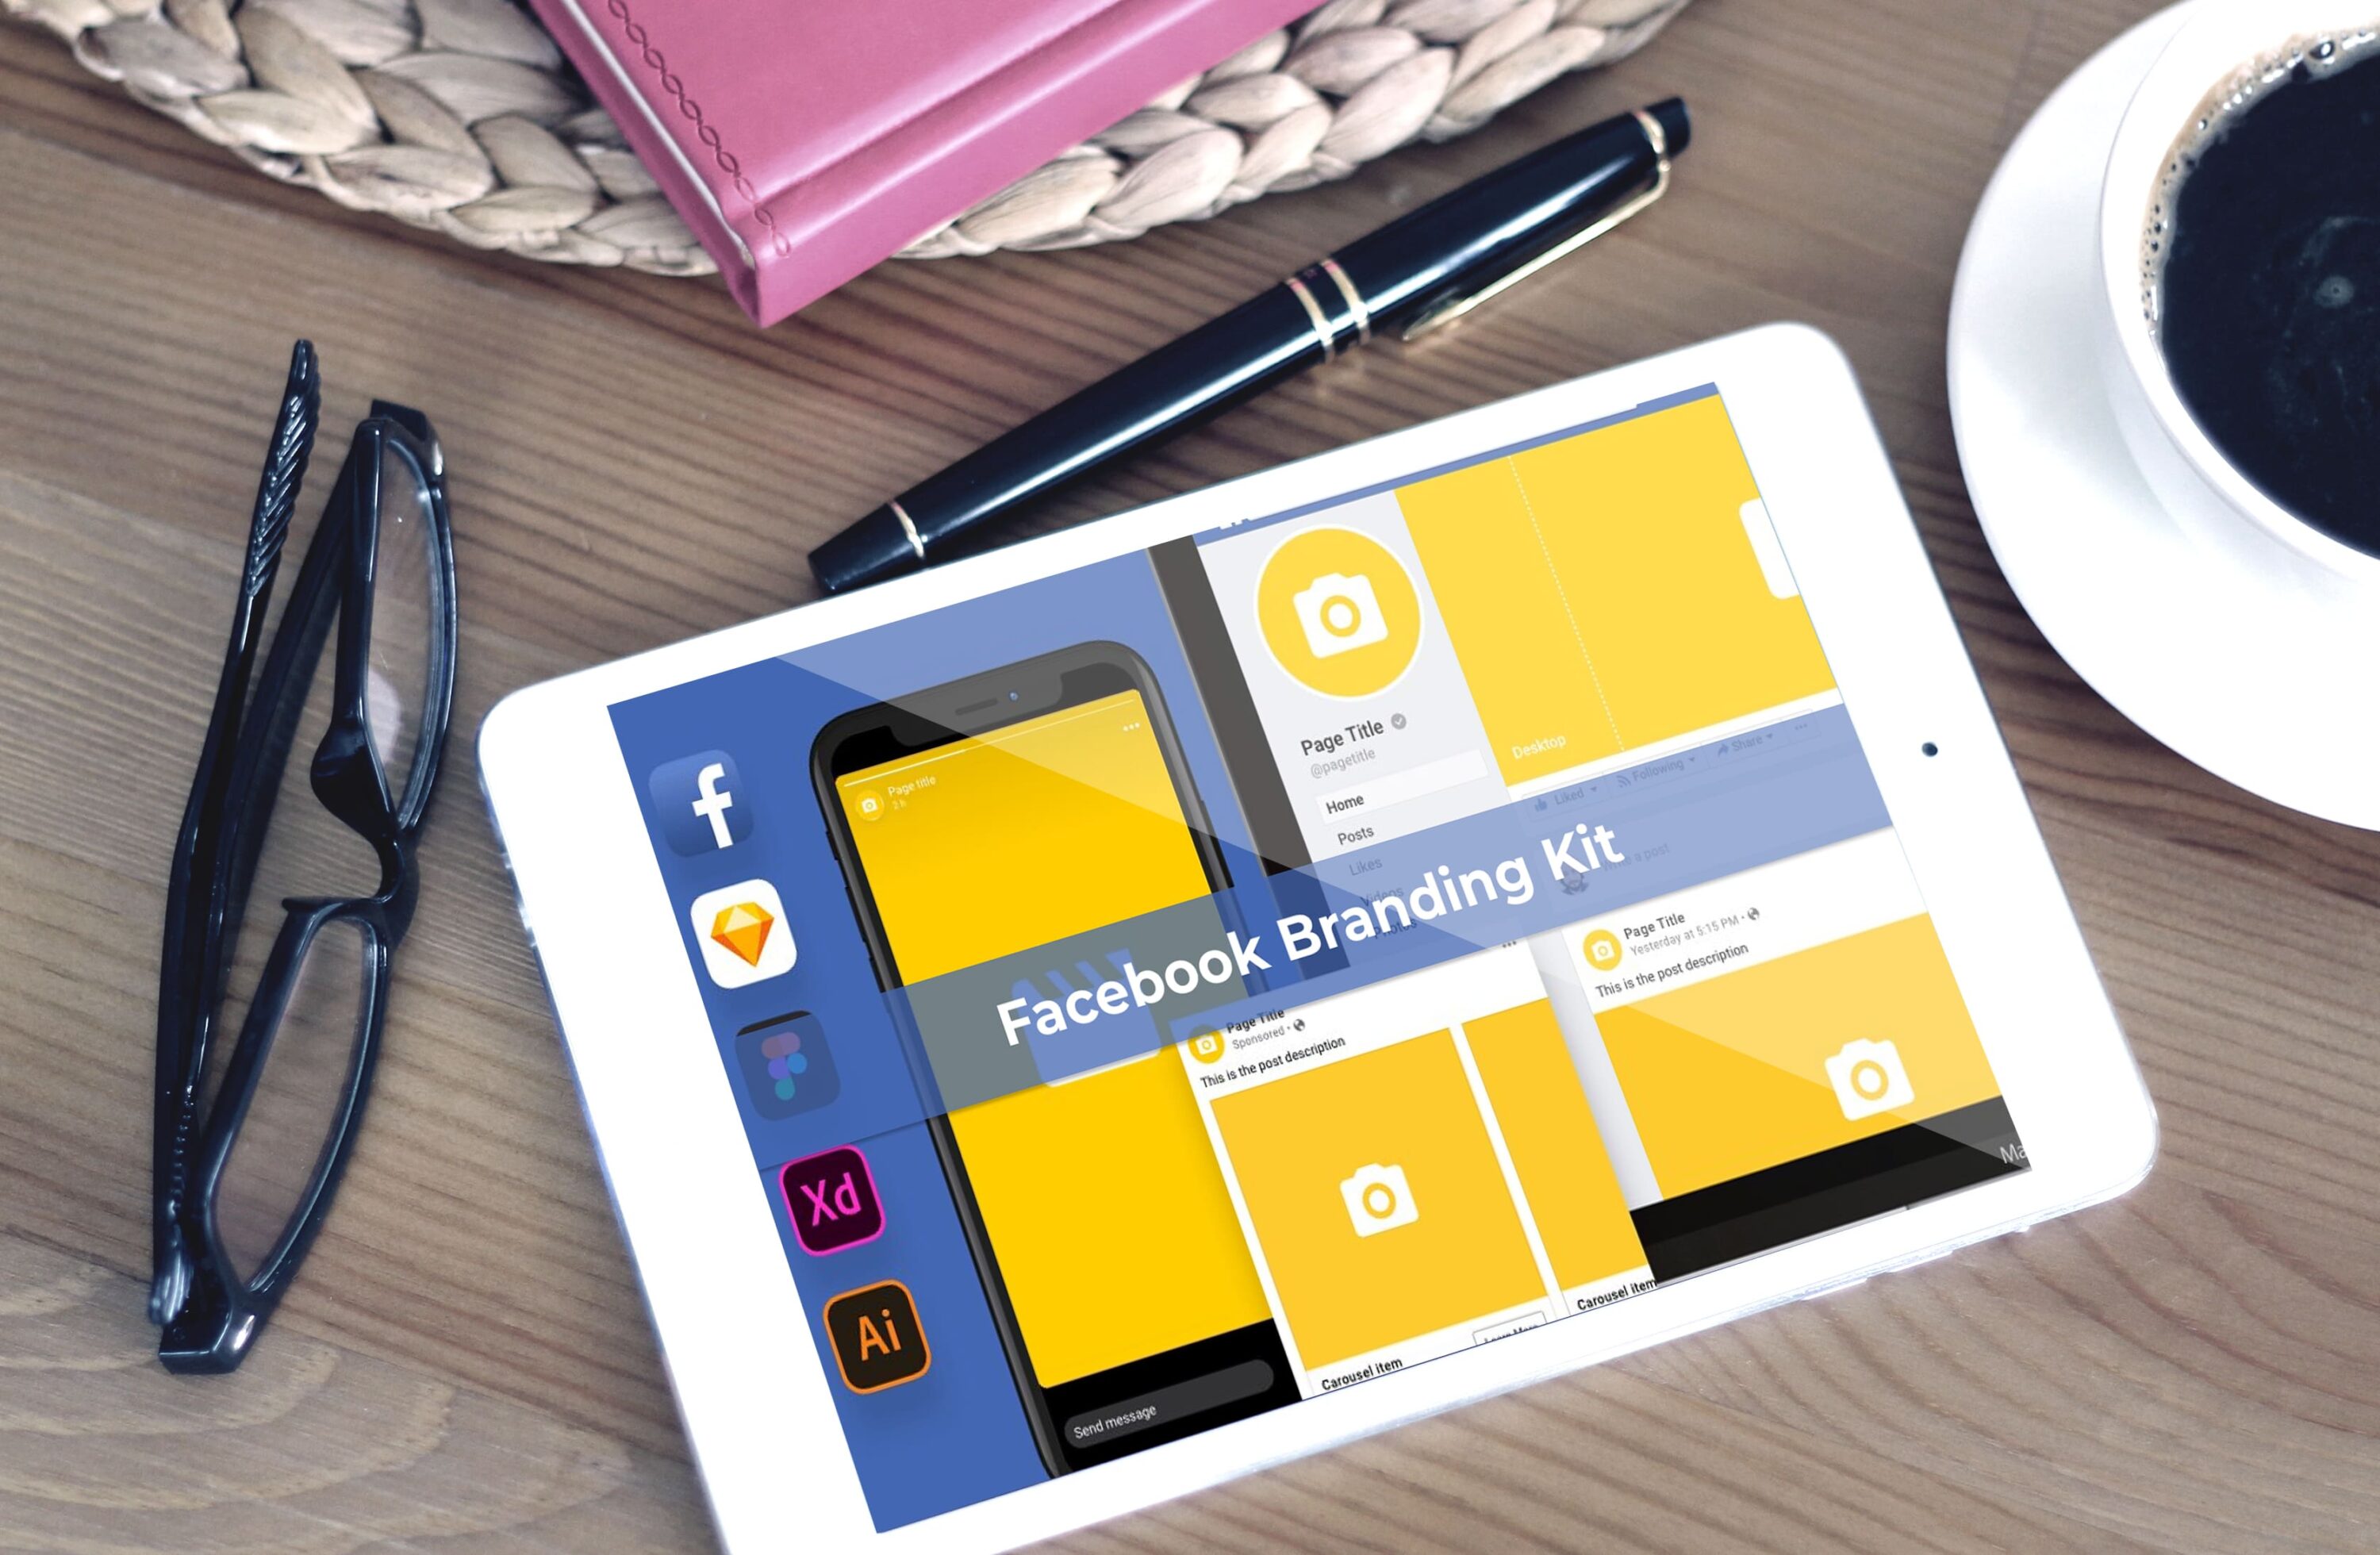 Tablet option of the Facebook Branding Kit.